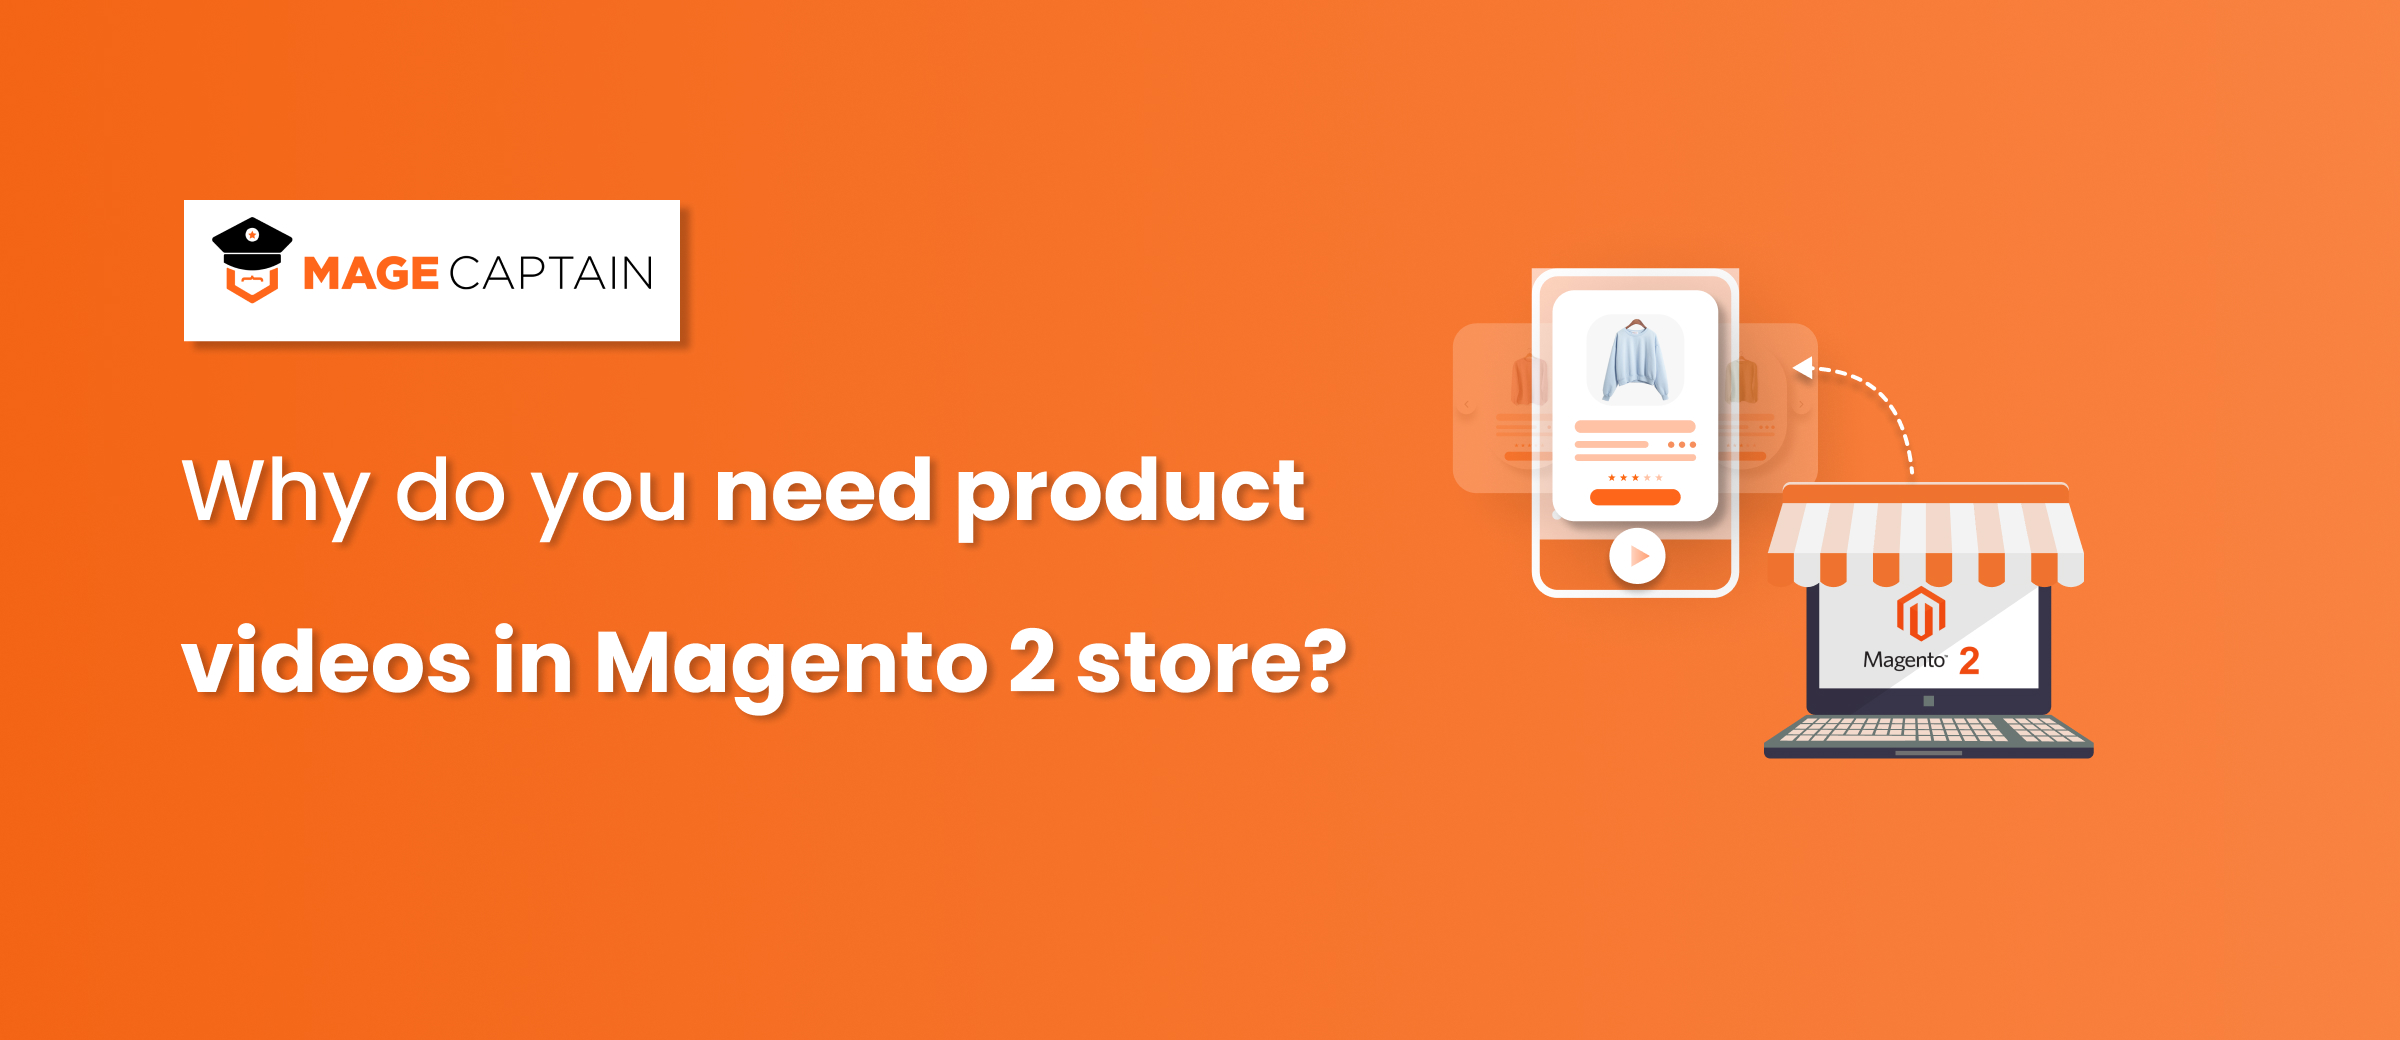 Magento 2 Store